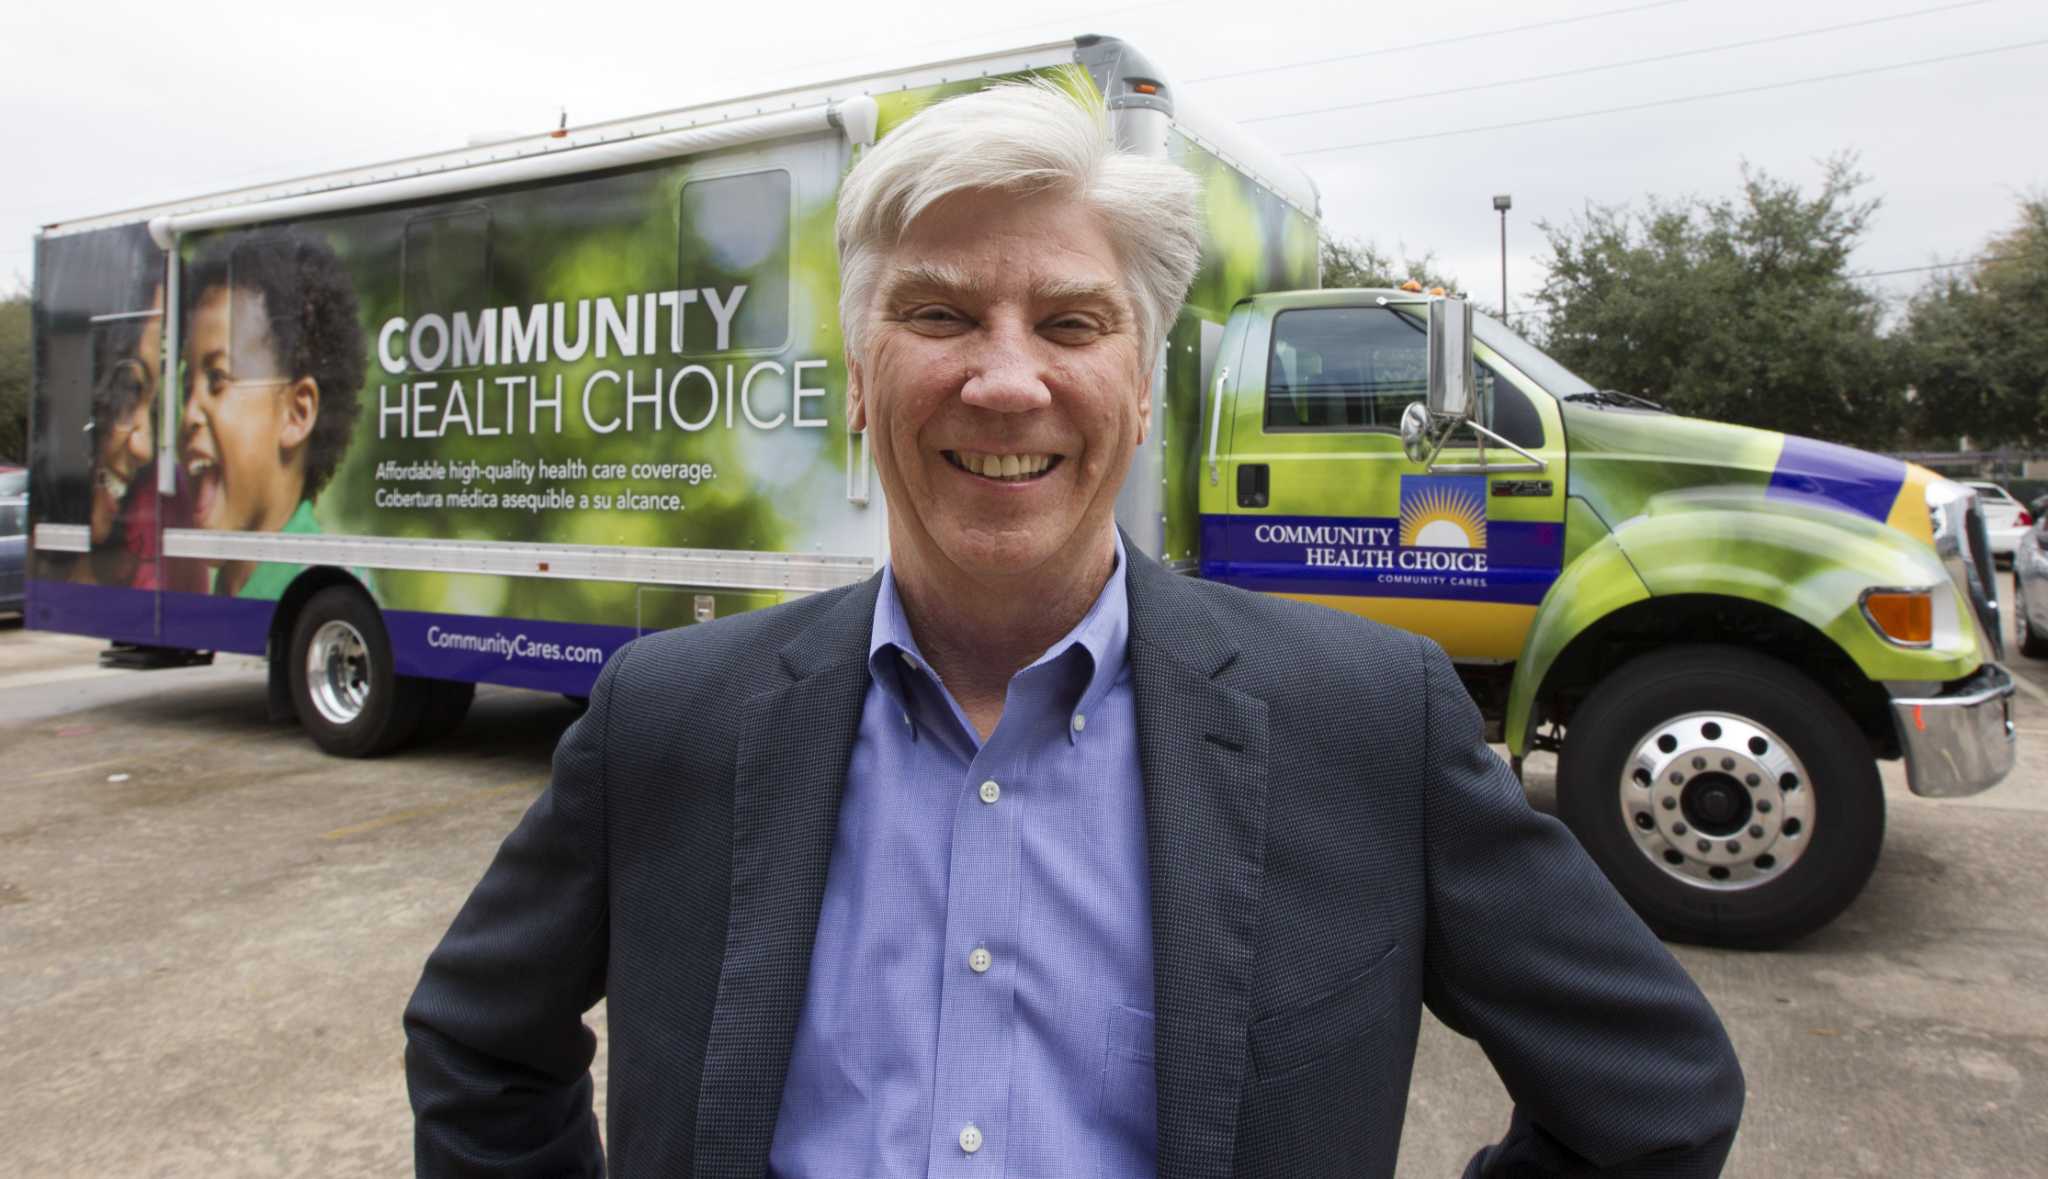 Ken Janda, CEO of Community Health Choice, abruptly resigns